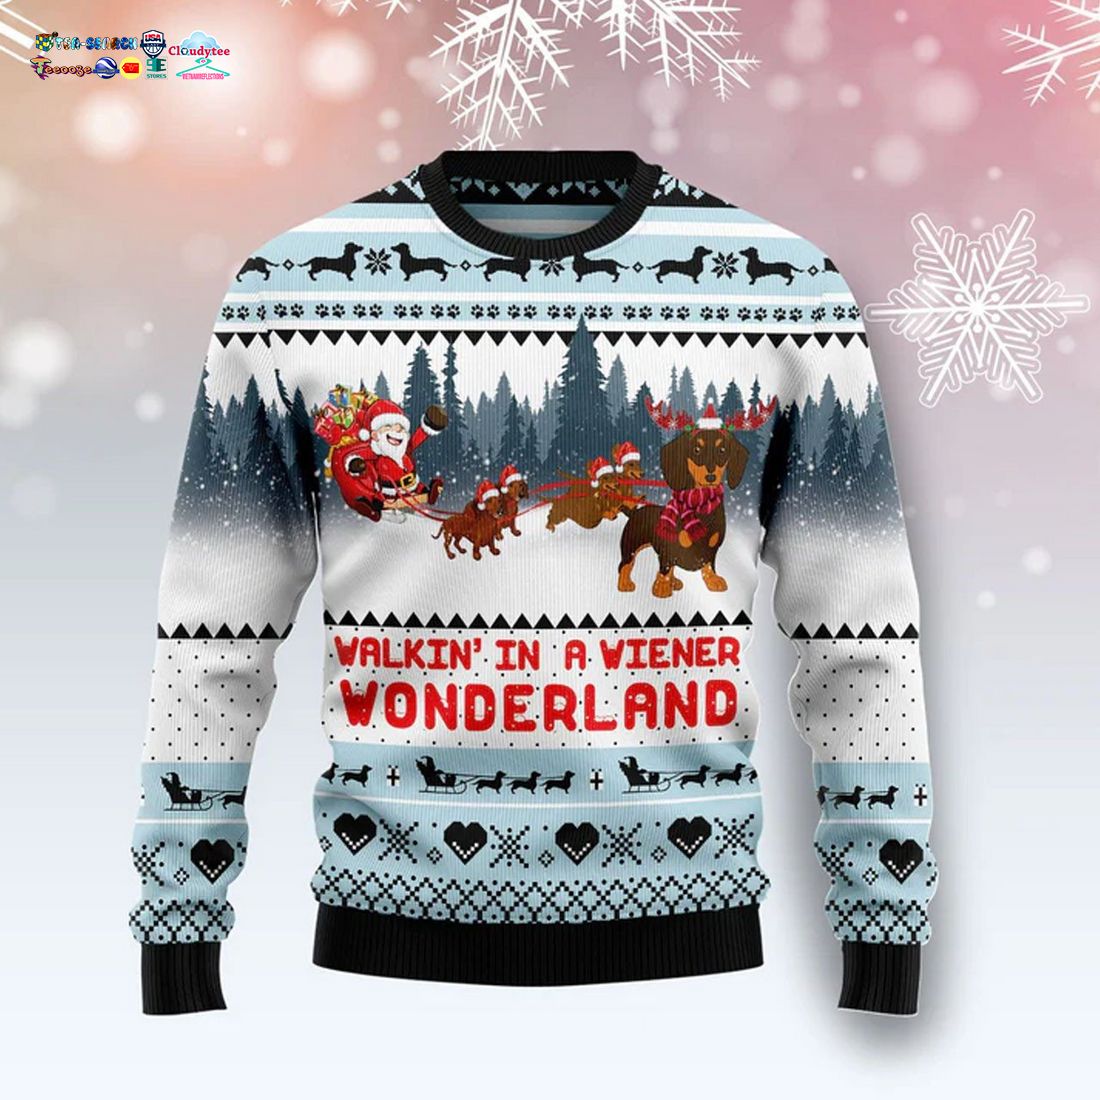 dachshund-walkin-in-a-wiener-wonderland-ugly-christmas-sweater-1-gZ6Bi.jpg